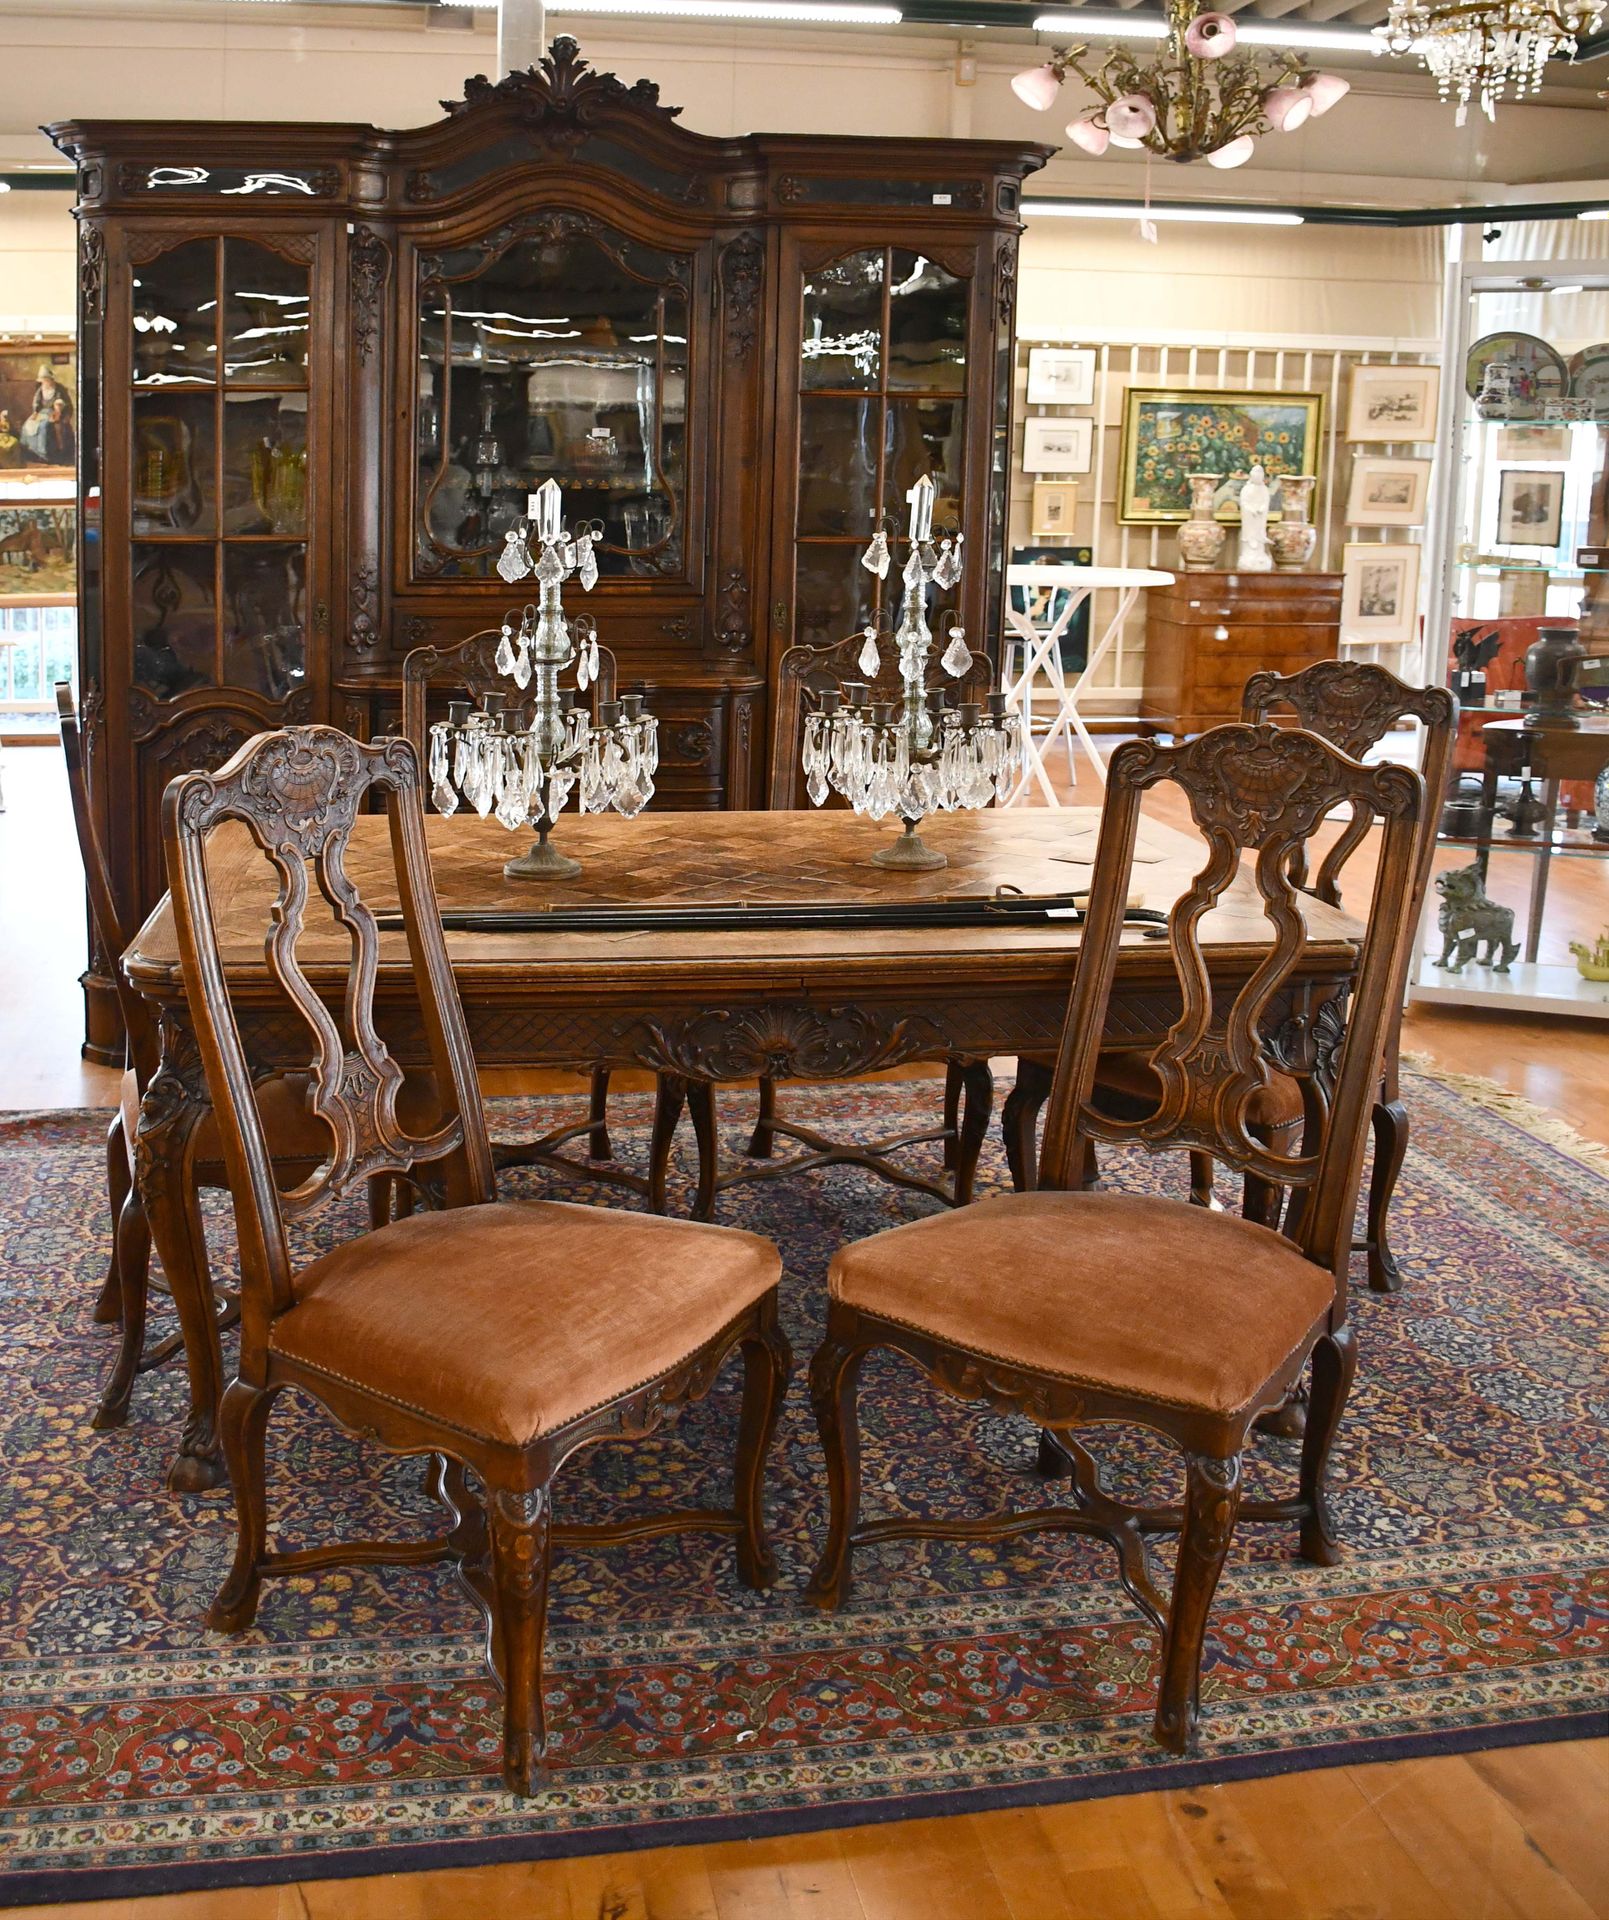 Null 列日餐厅在路易十四/摄政风格的橡木雕花中。

一个展示柜，一张桌子和六把带杆的椅子。